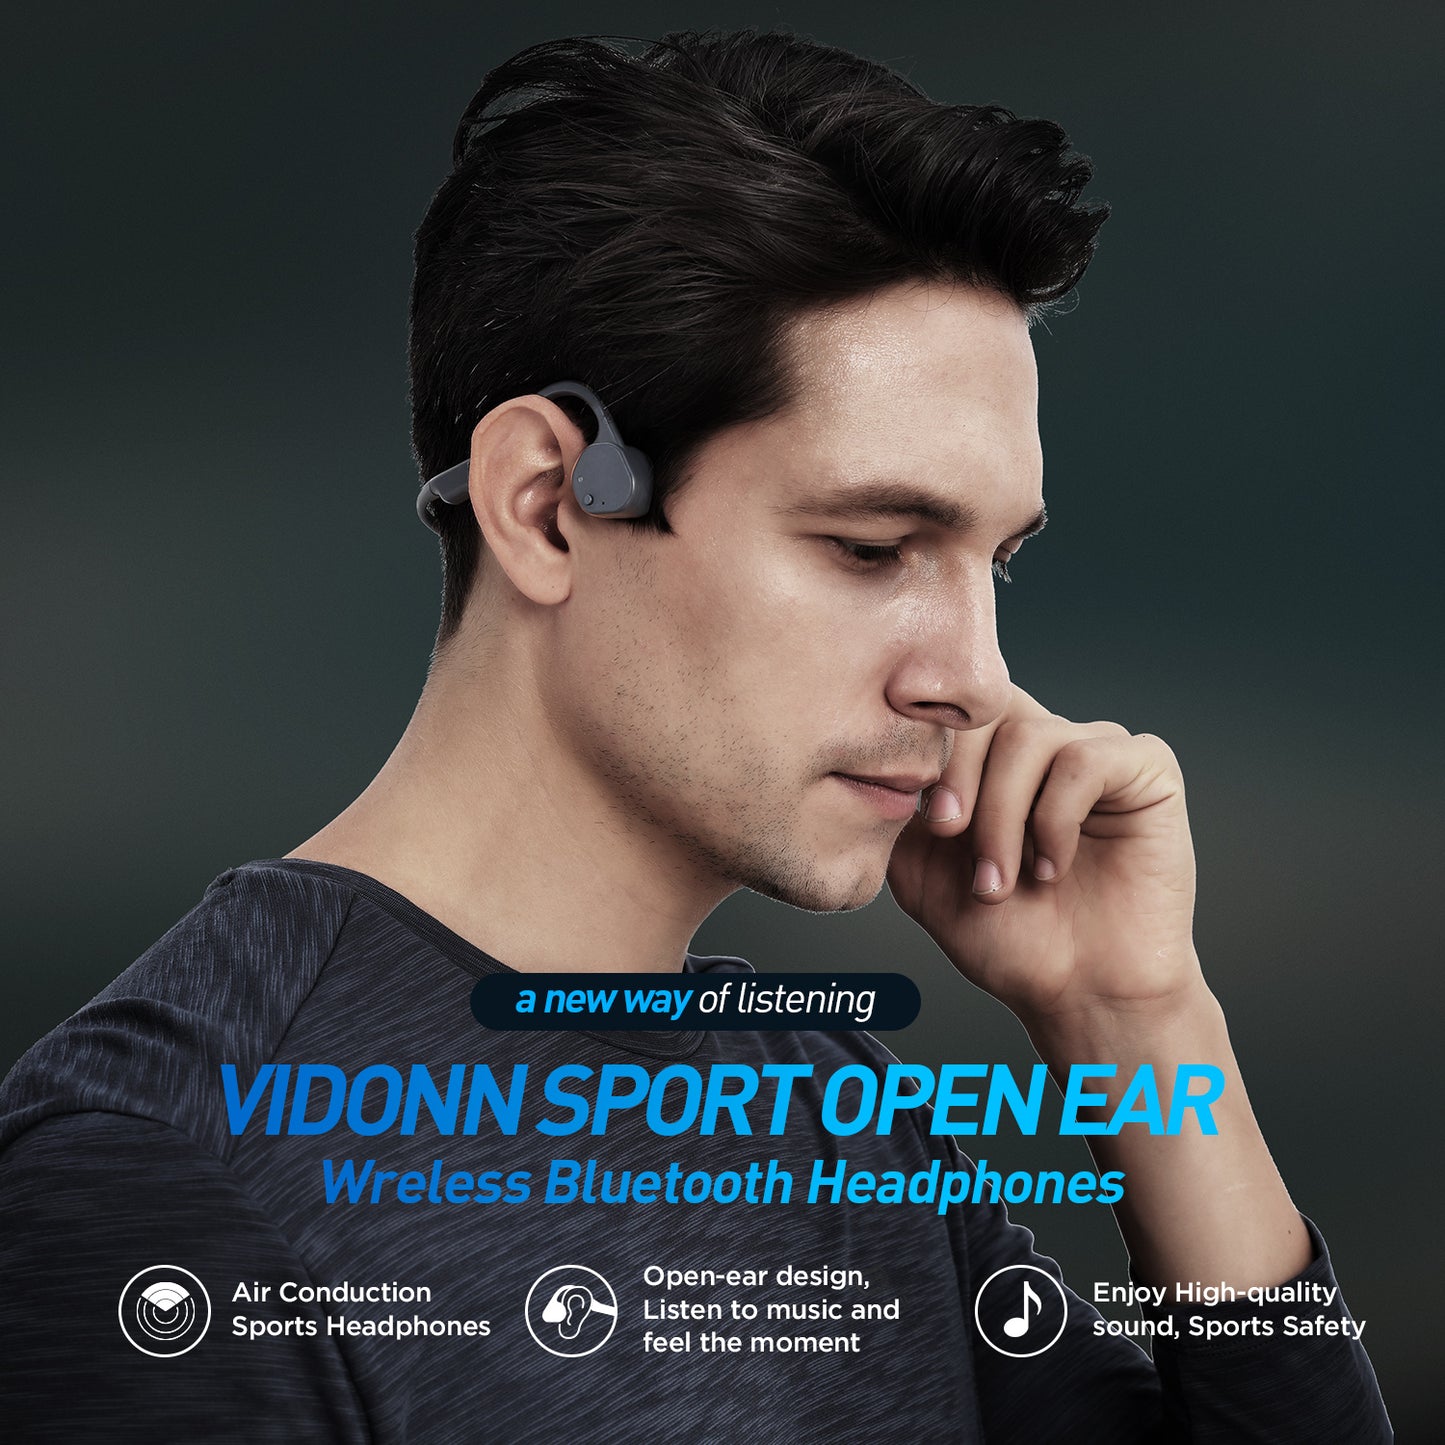 Vidonn sport Open ear wireless bluetooth headphones